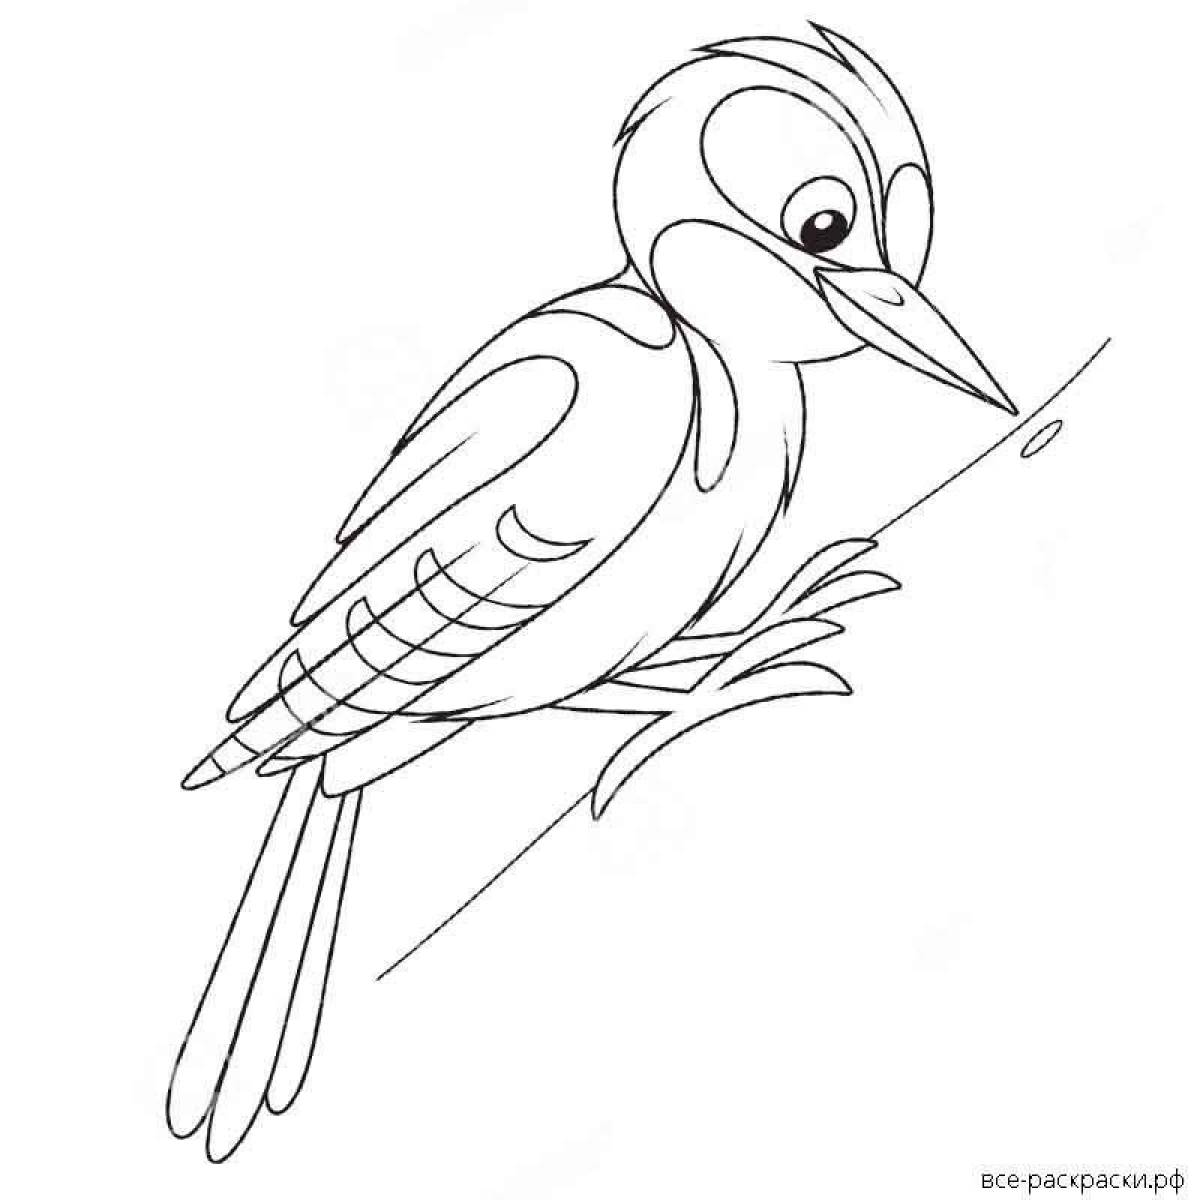 Unique woodpecker coloring book for kids